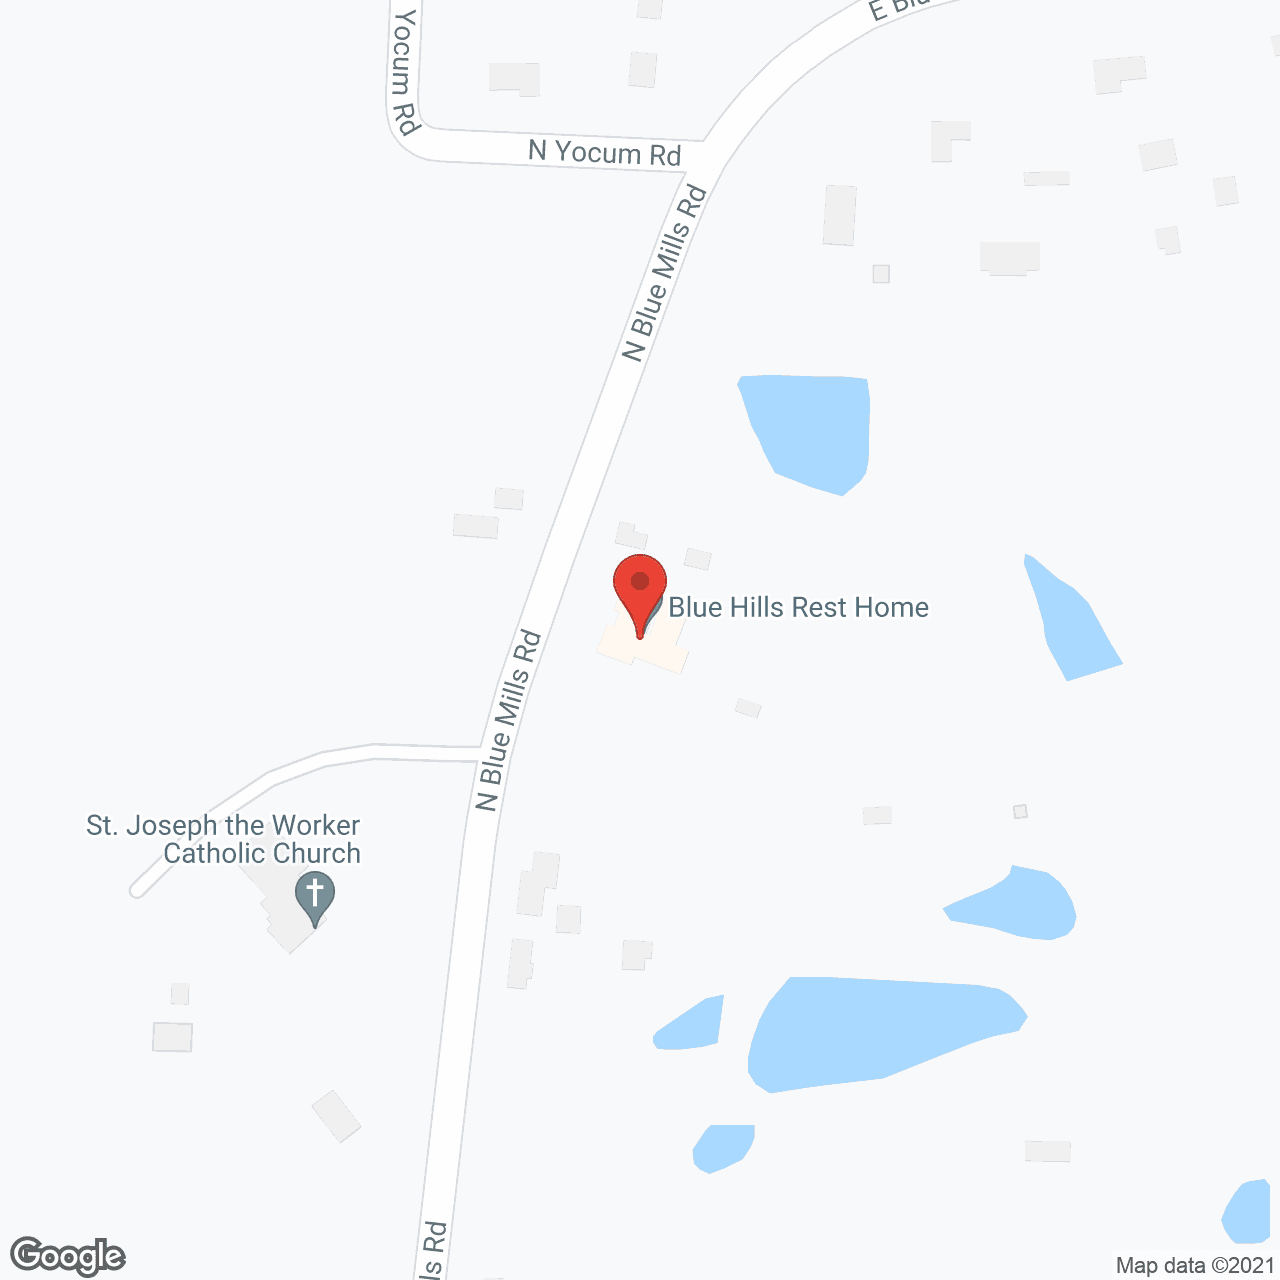 Blue Hills Rest Home in google map